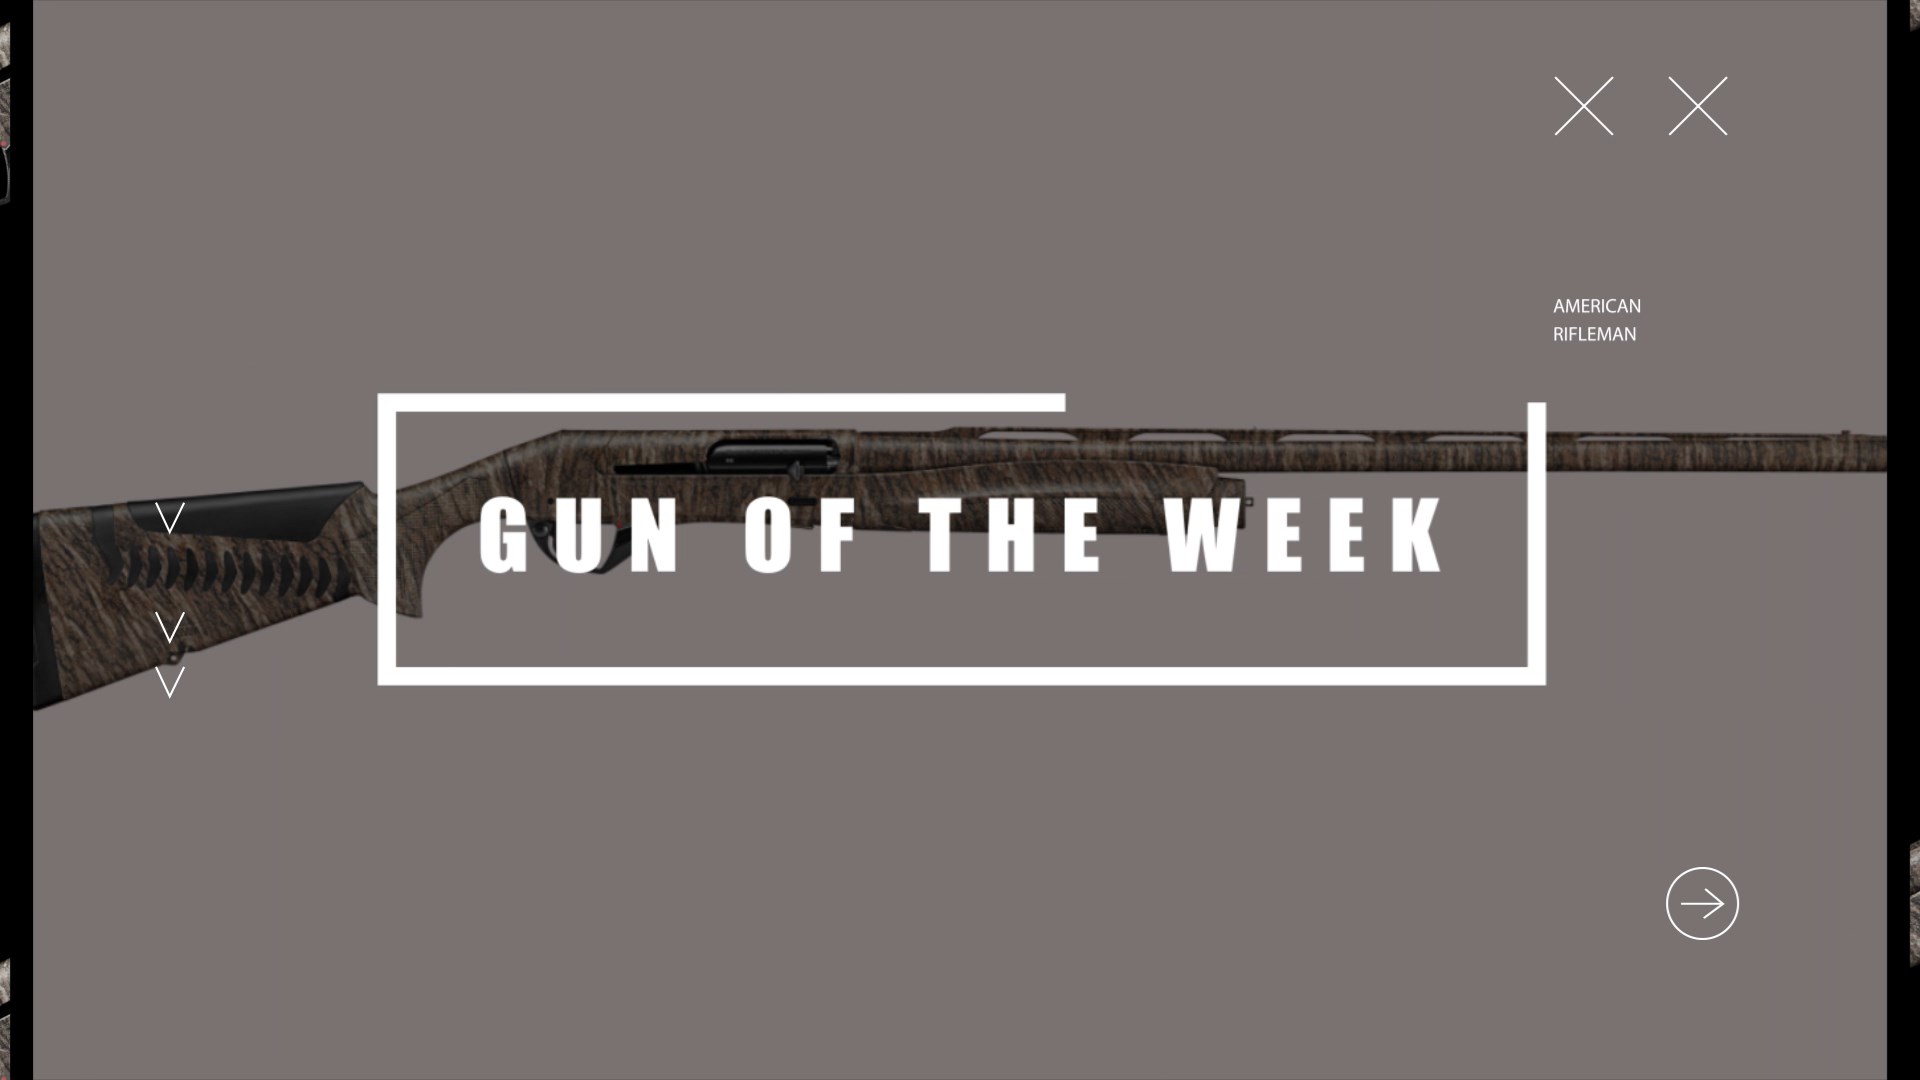 GUN OF THE WEEK title screen text on image over Benelli Super Black Eagle 3 20 gauge shotgun camouflage mossy oak bottomland SBE3